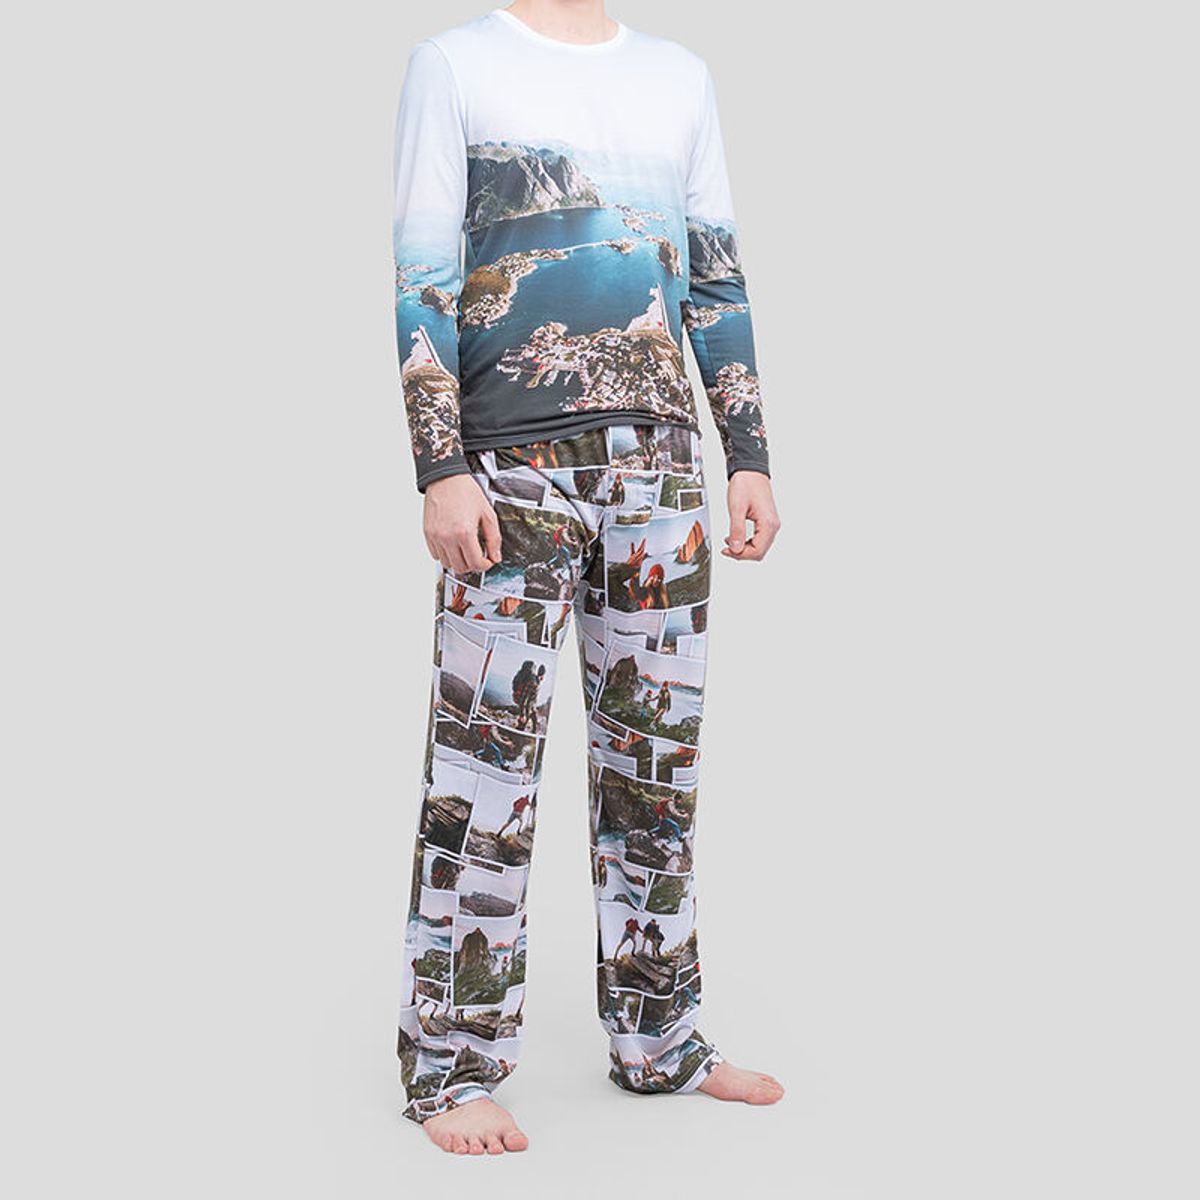 Personalized Pajama Set